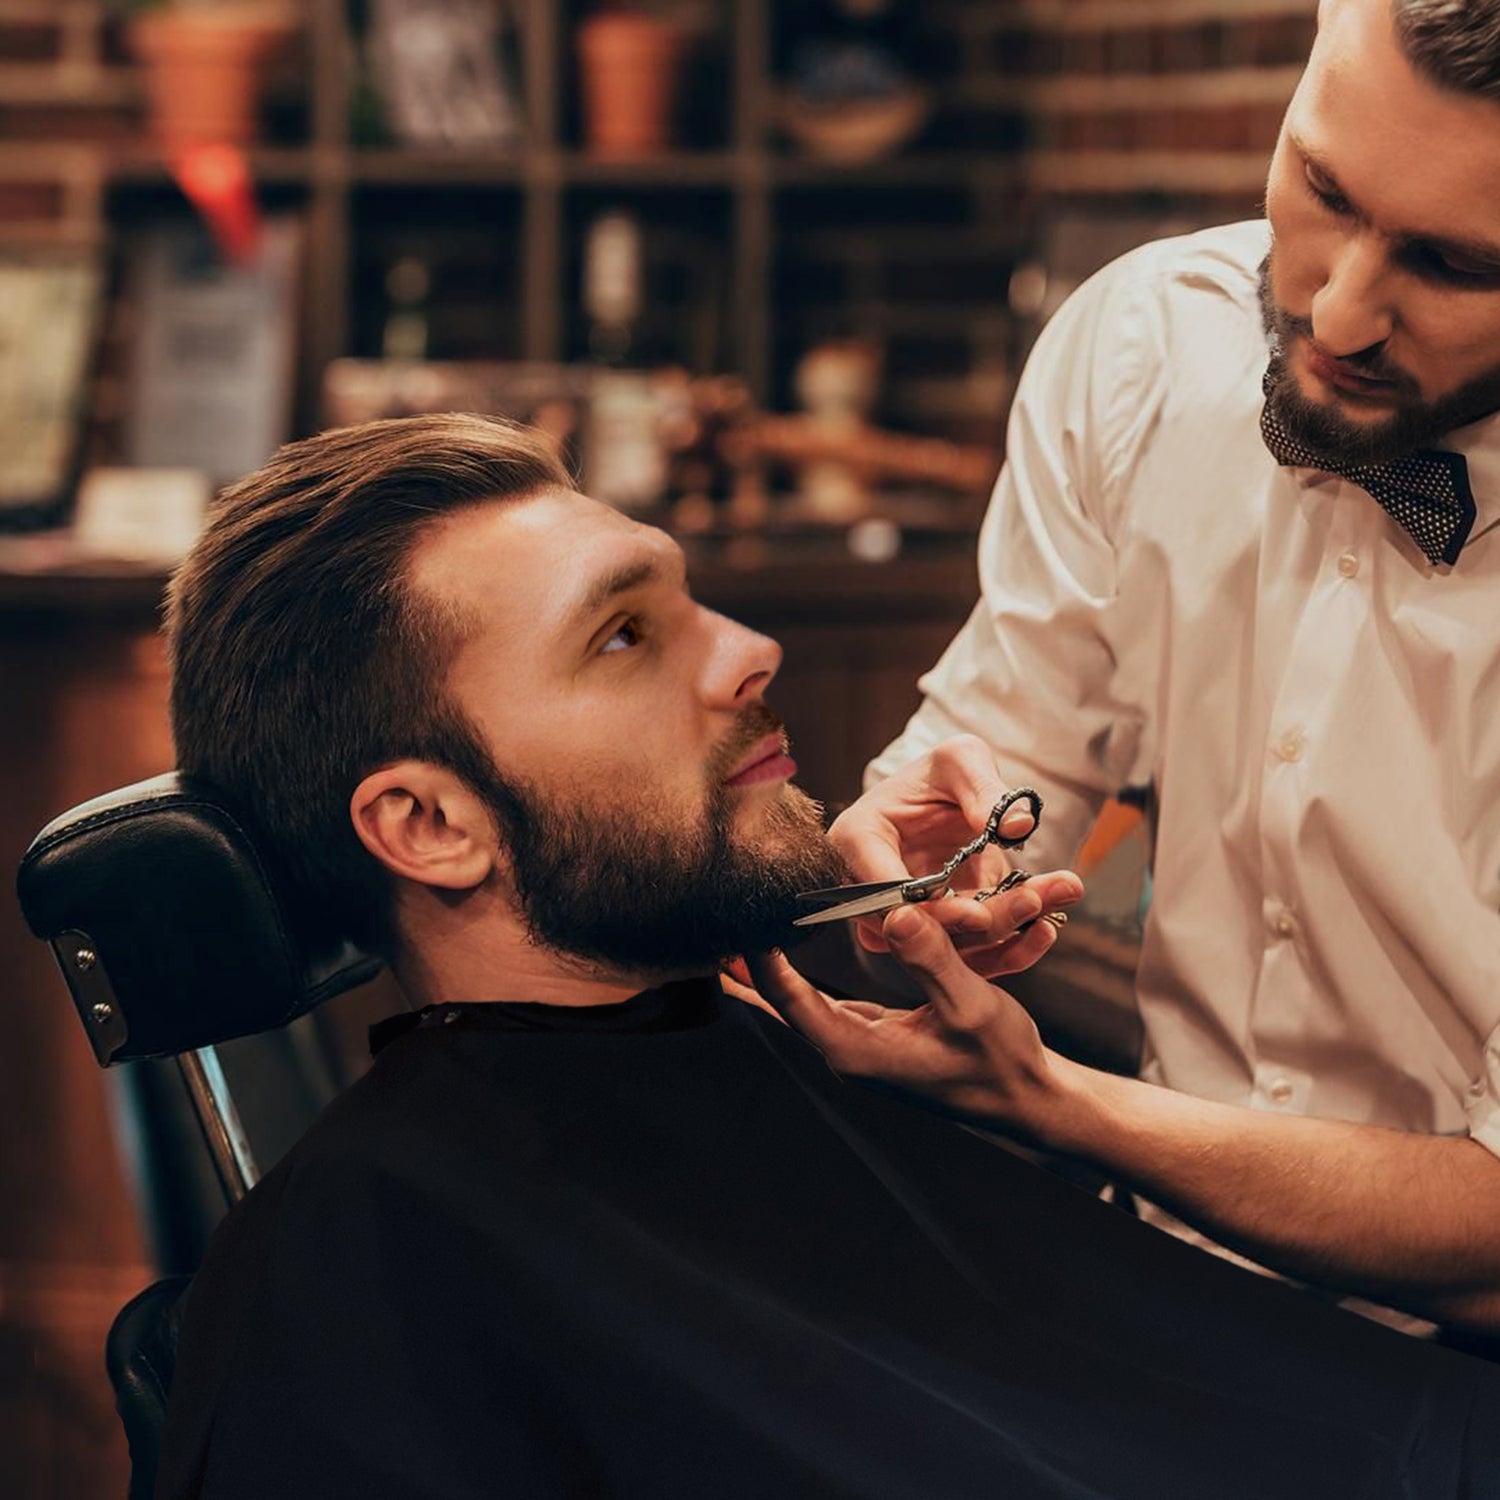 360 Barber Cape - Lightweight Professional Hair Cutting Apron